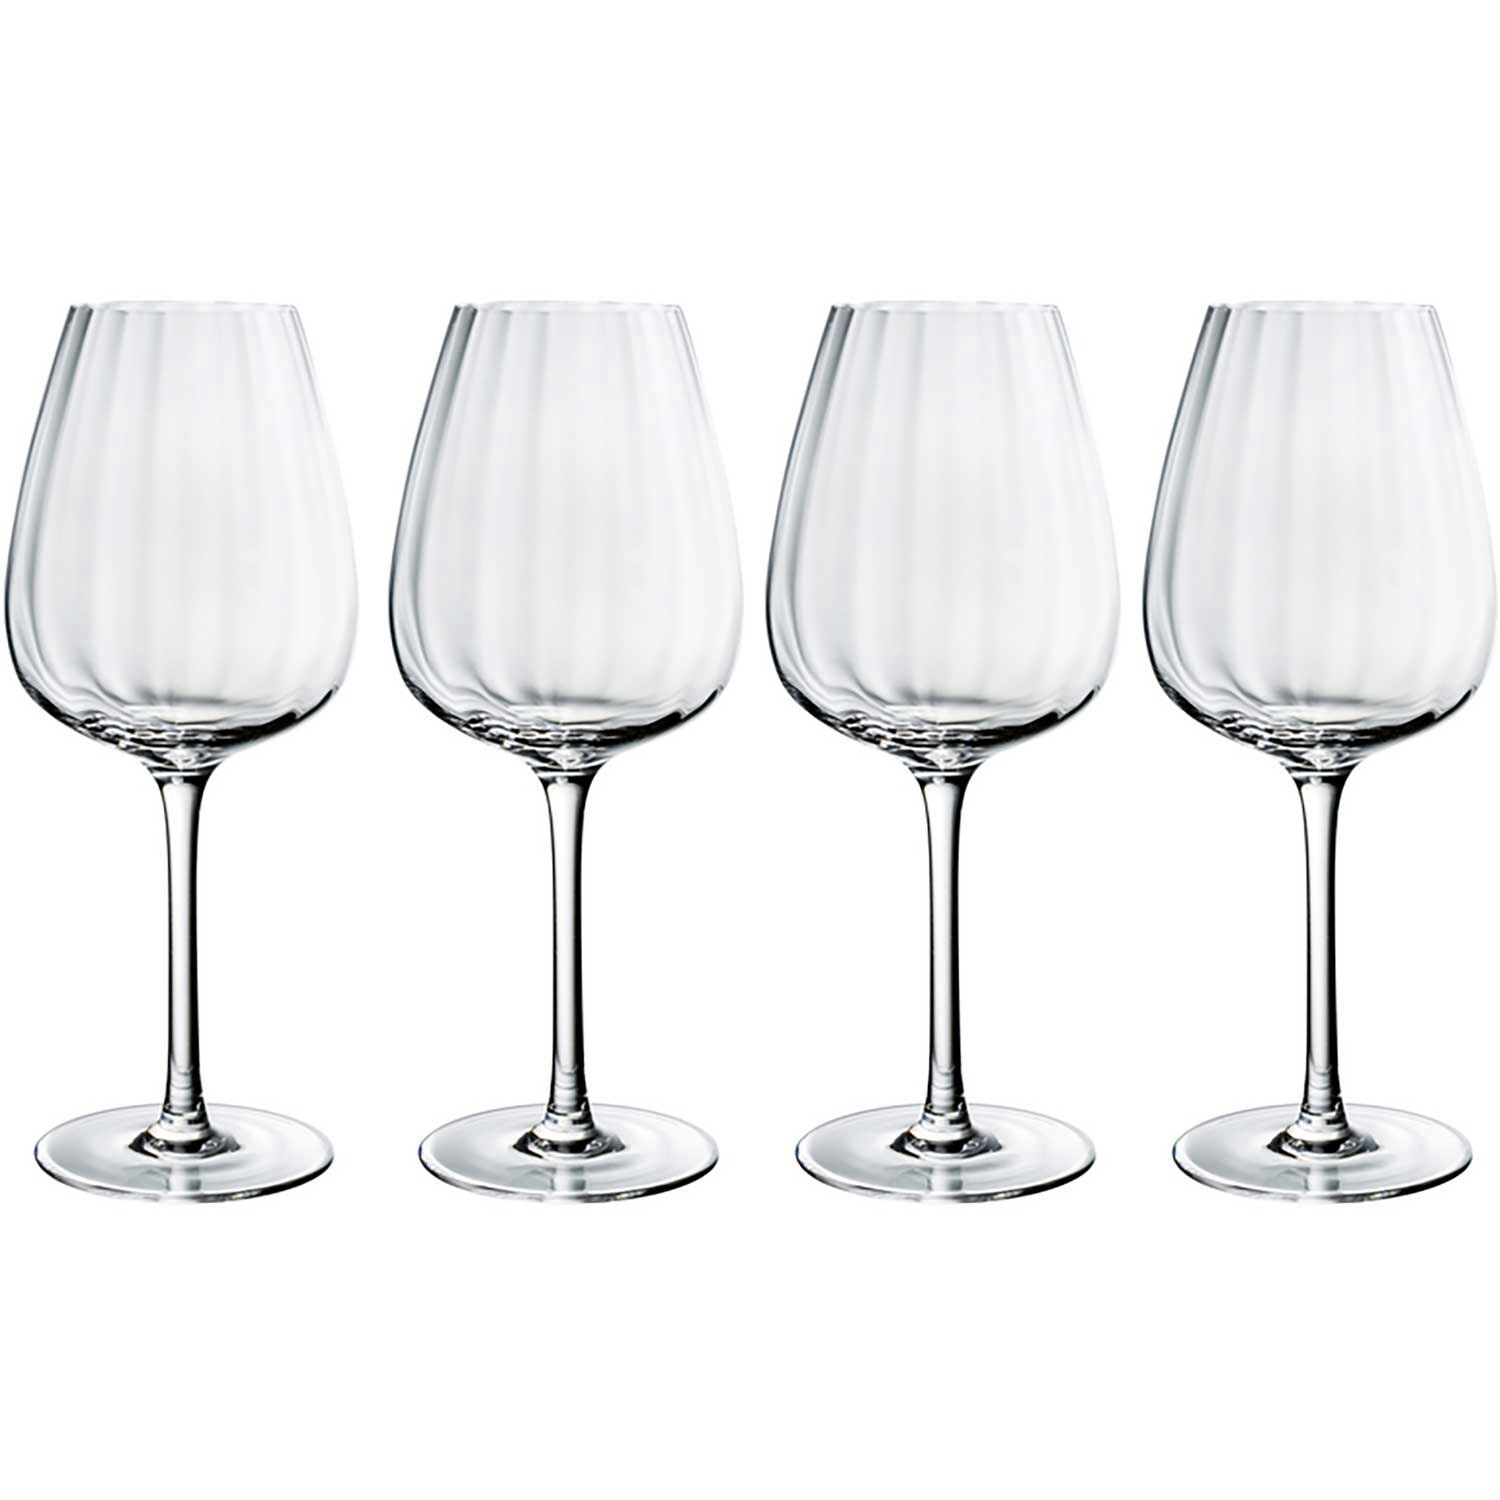 Optica Bordeaux Red Wine Glass 70 cl 4-pack - Luigi Bormioli @ RoyalDesign